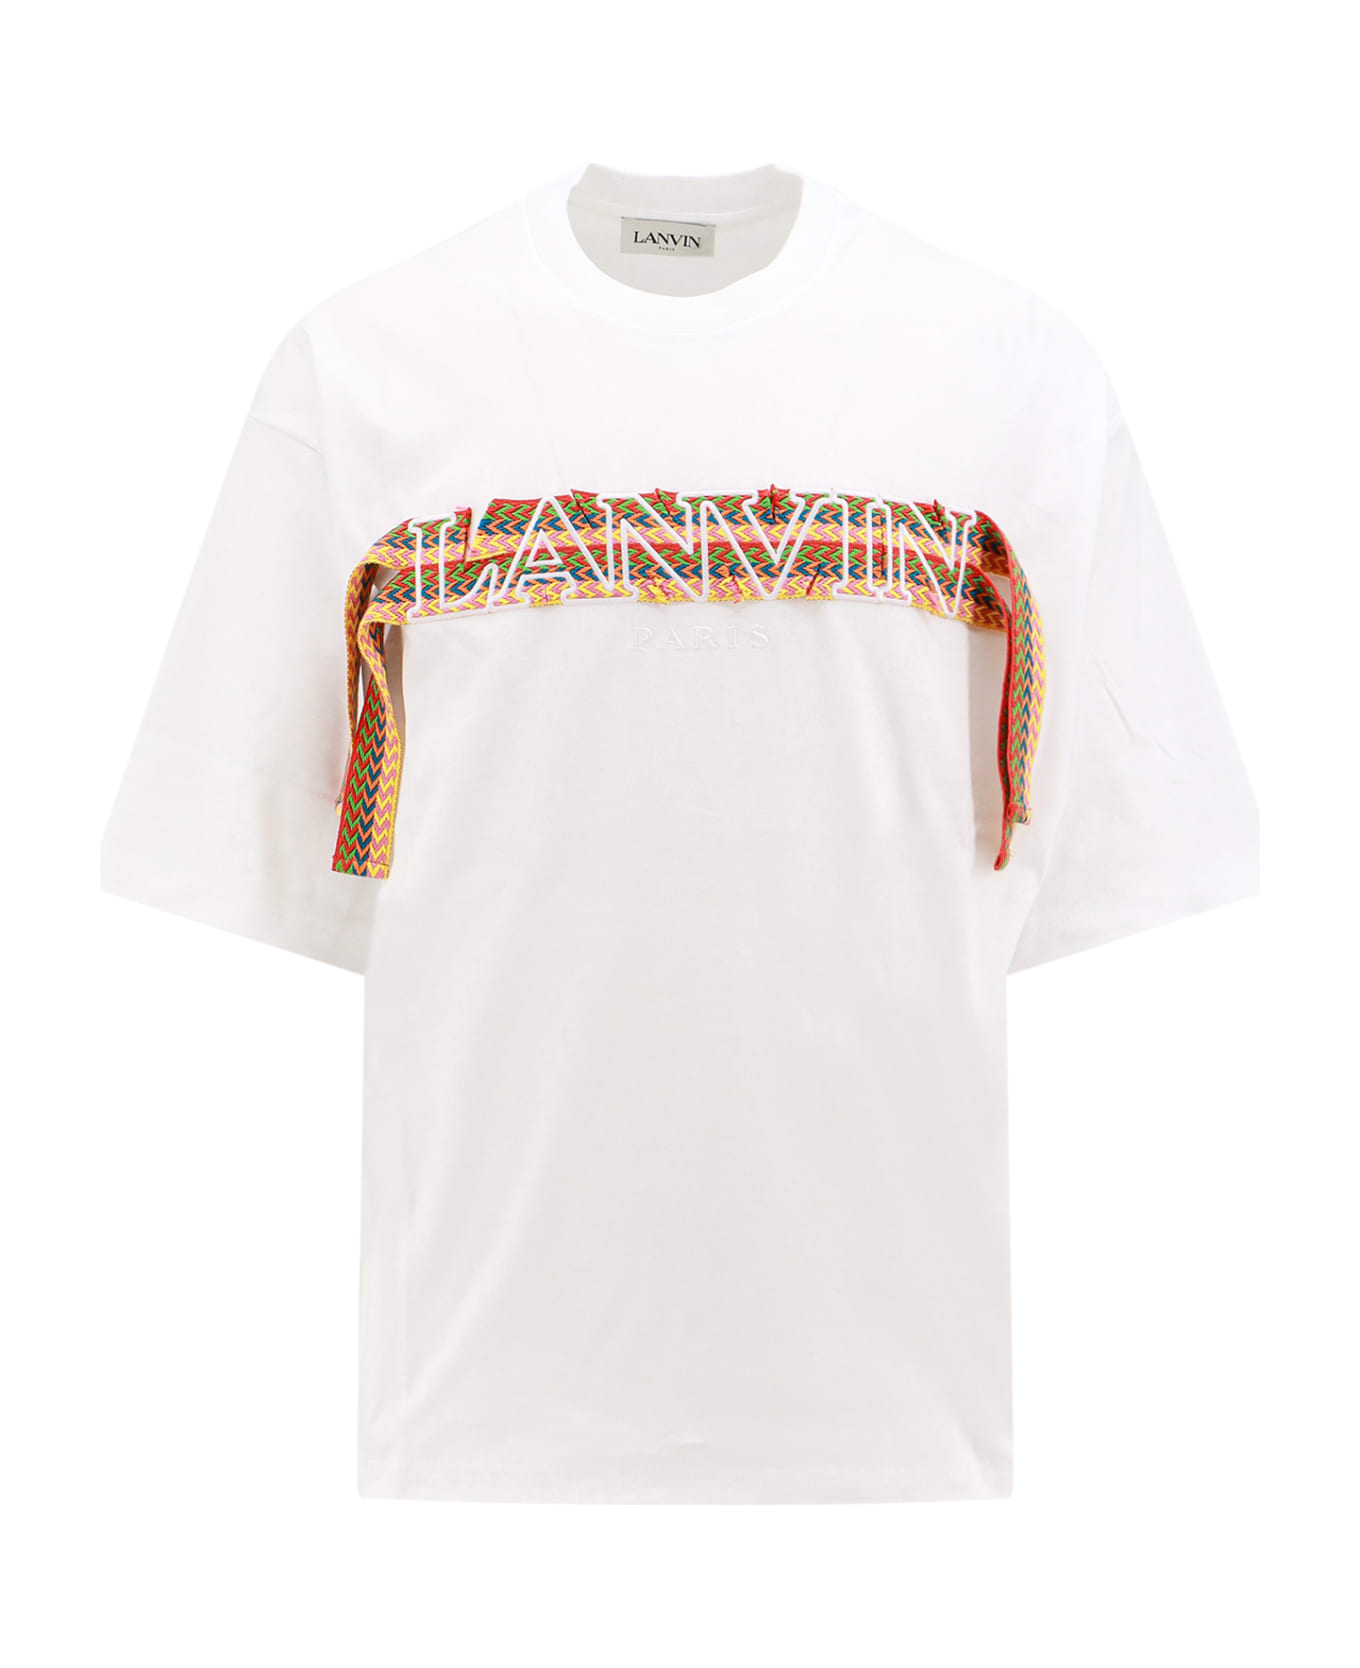 Lanvin T-shirt - White シャツ